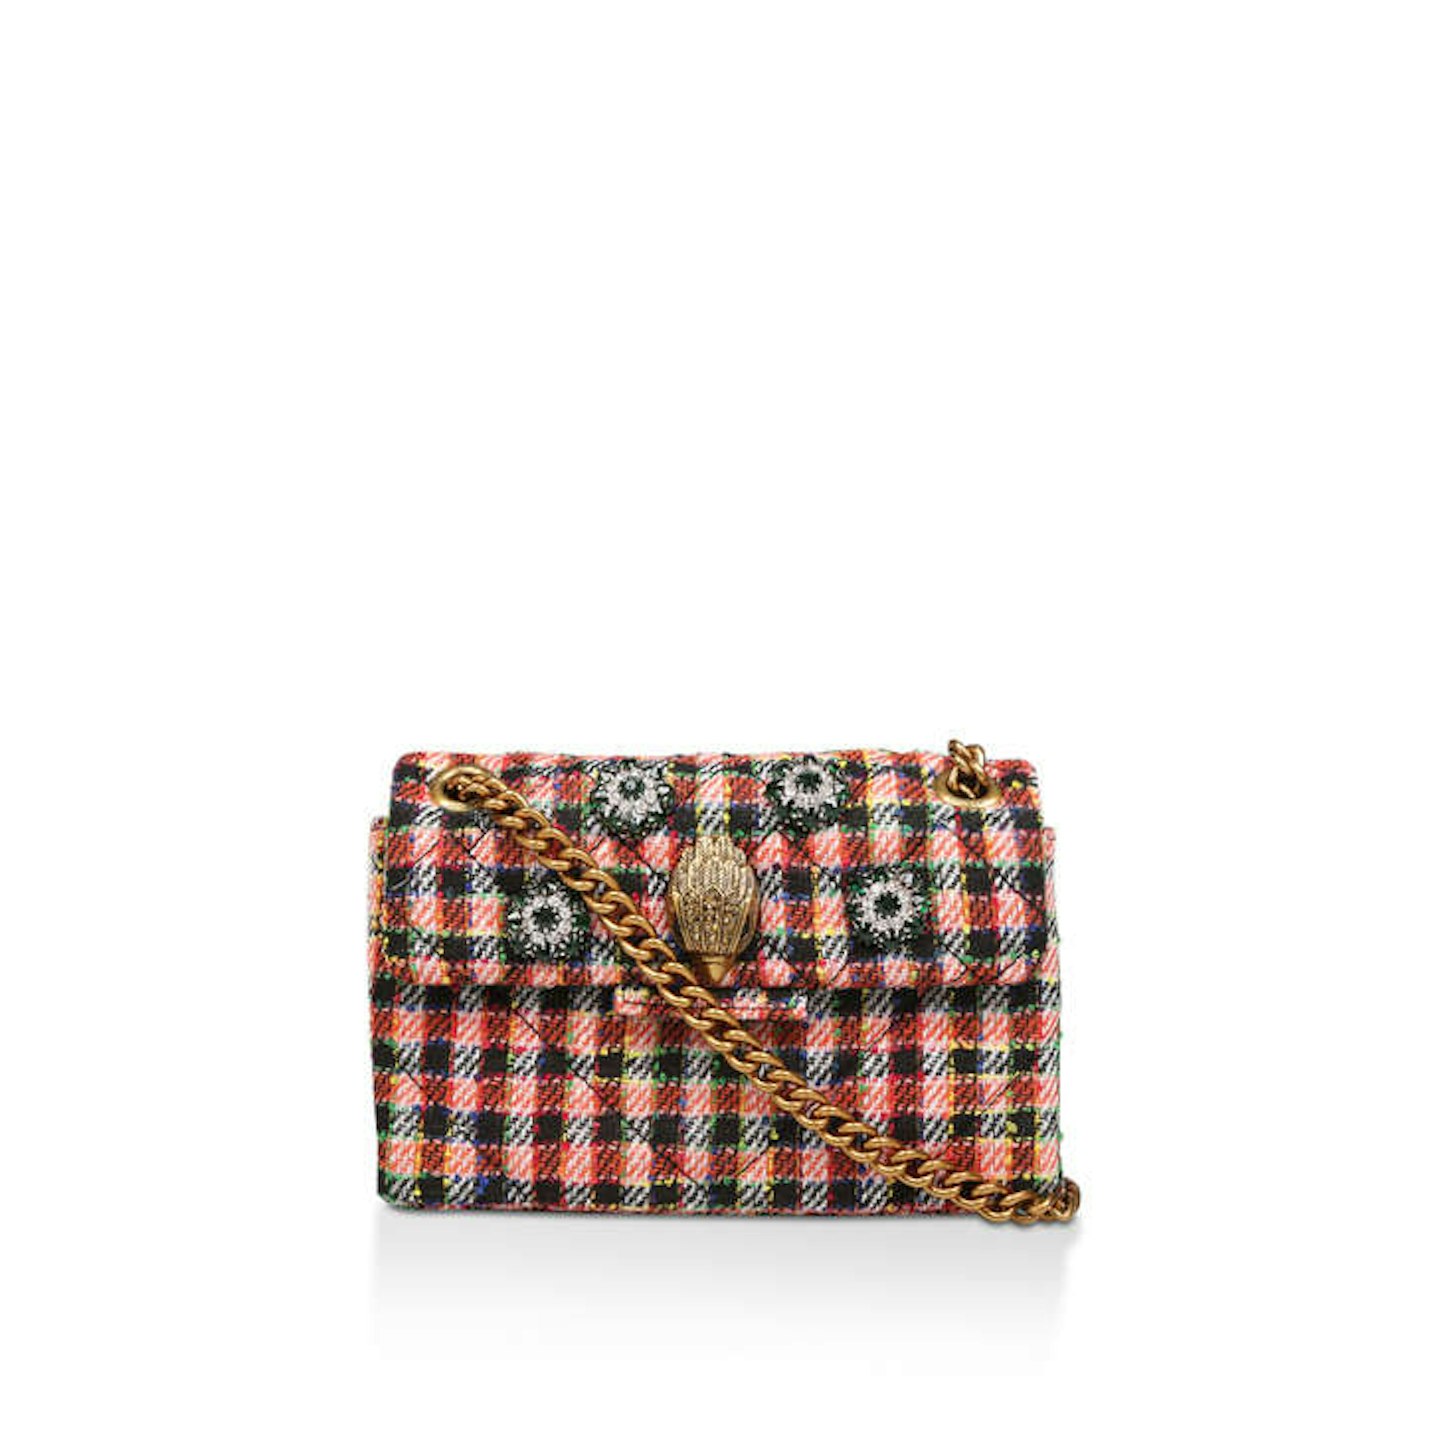 Fabric Mini Kensington Handbag, £99